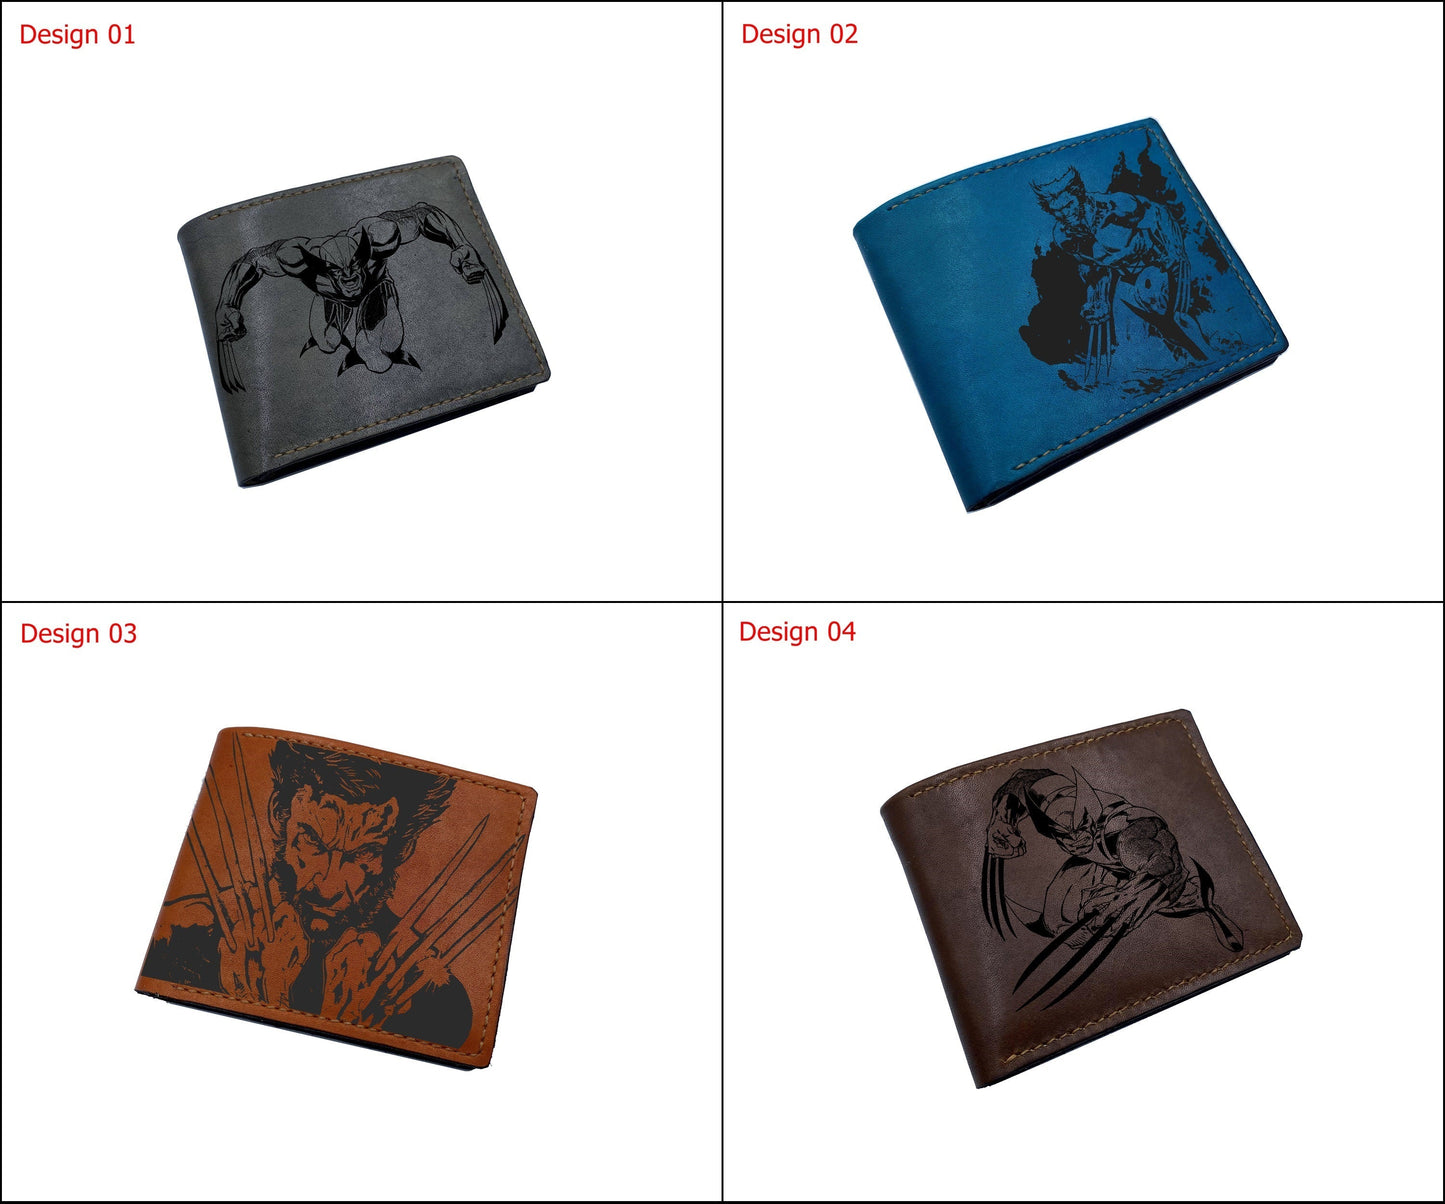 Mayan Corner - Wolverine Xmen superheroes leather handmade wallet, Personalized leather wallet for men - 2710227